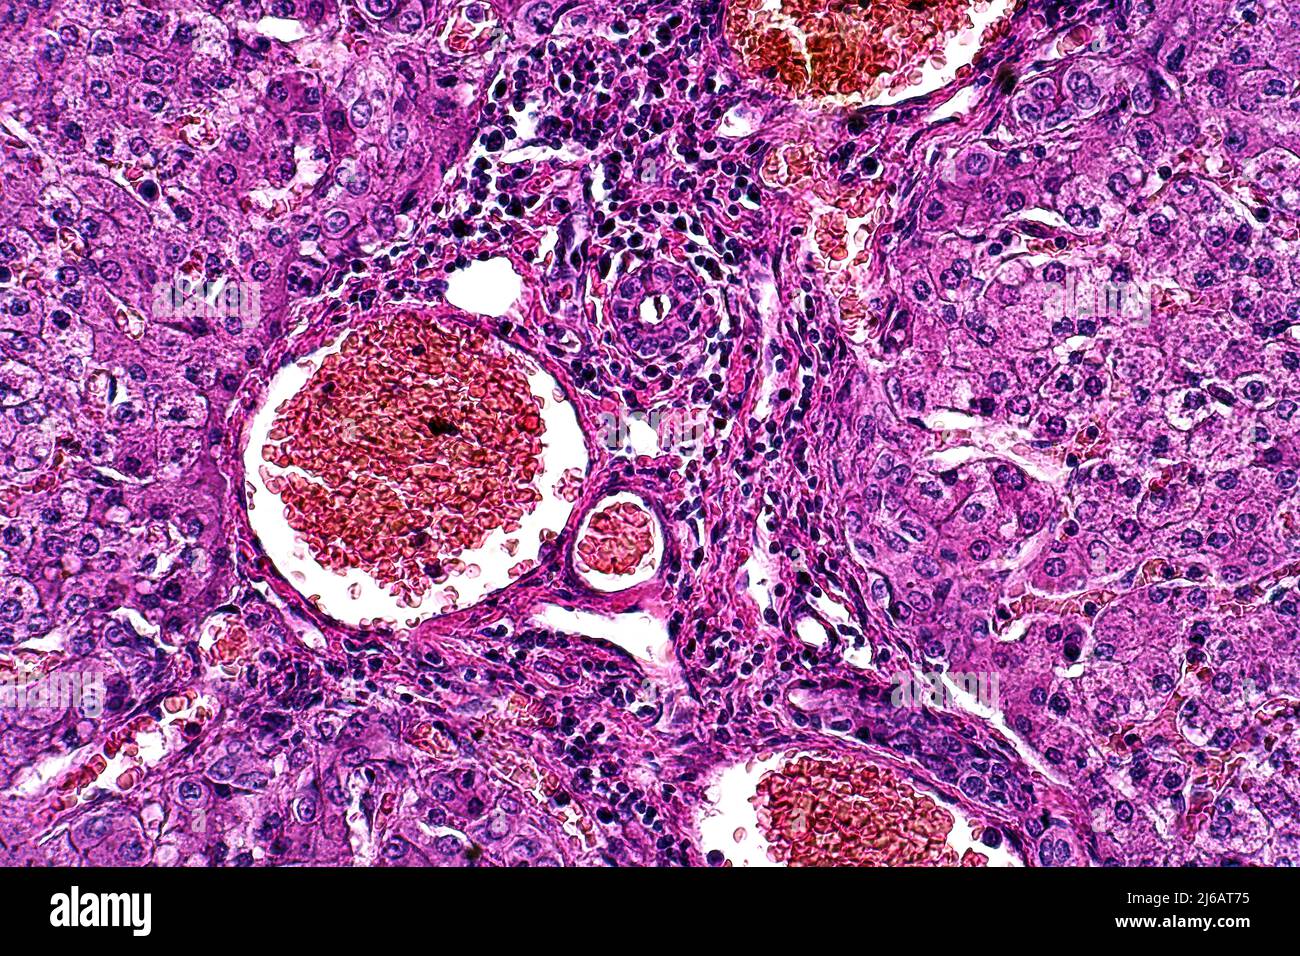 Liver degeneration, light micrograph Stock Photo